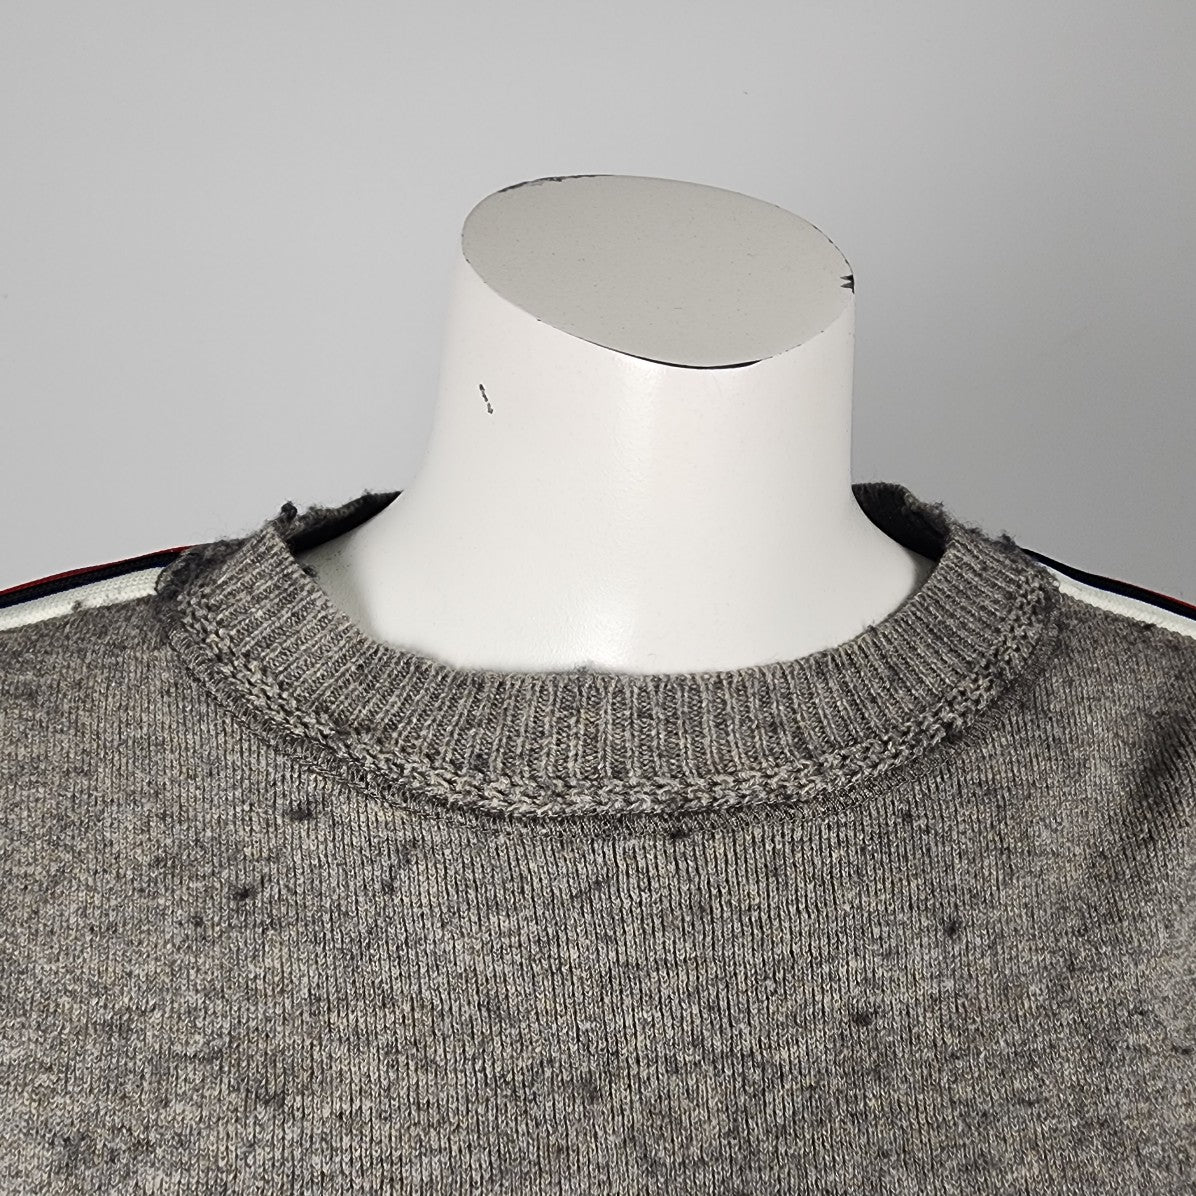 Isabel Etoile Marant Grey Cotton Blend Striped Sleeve Sweater Size S